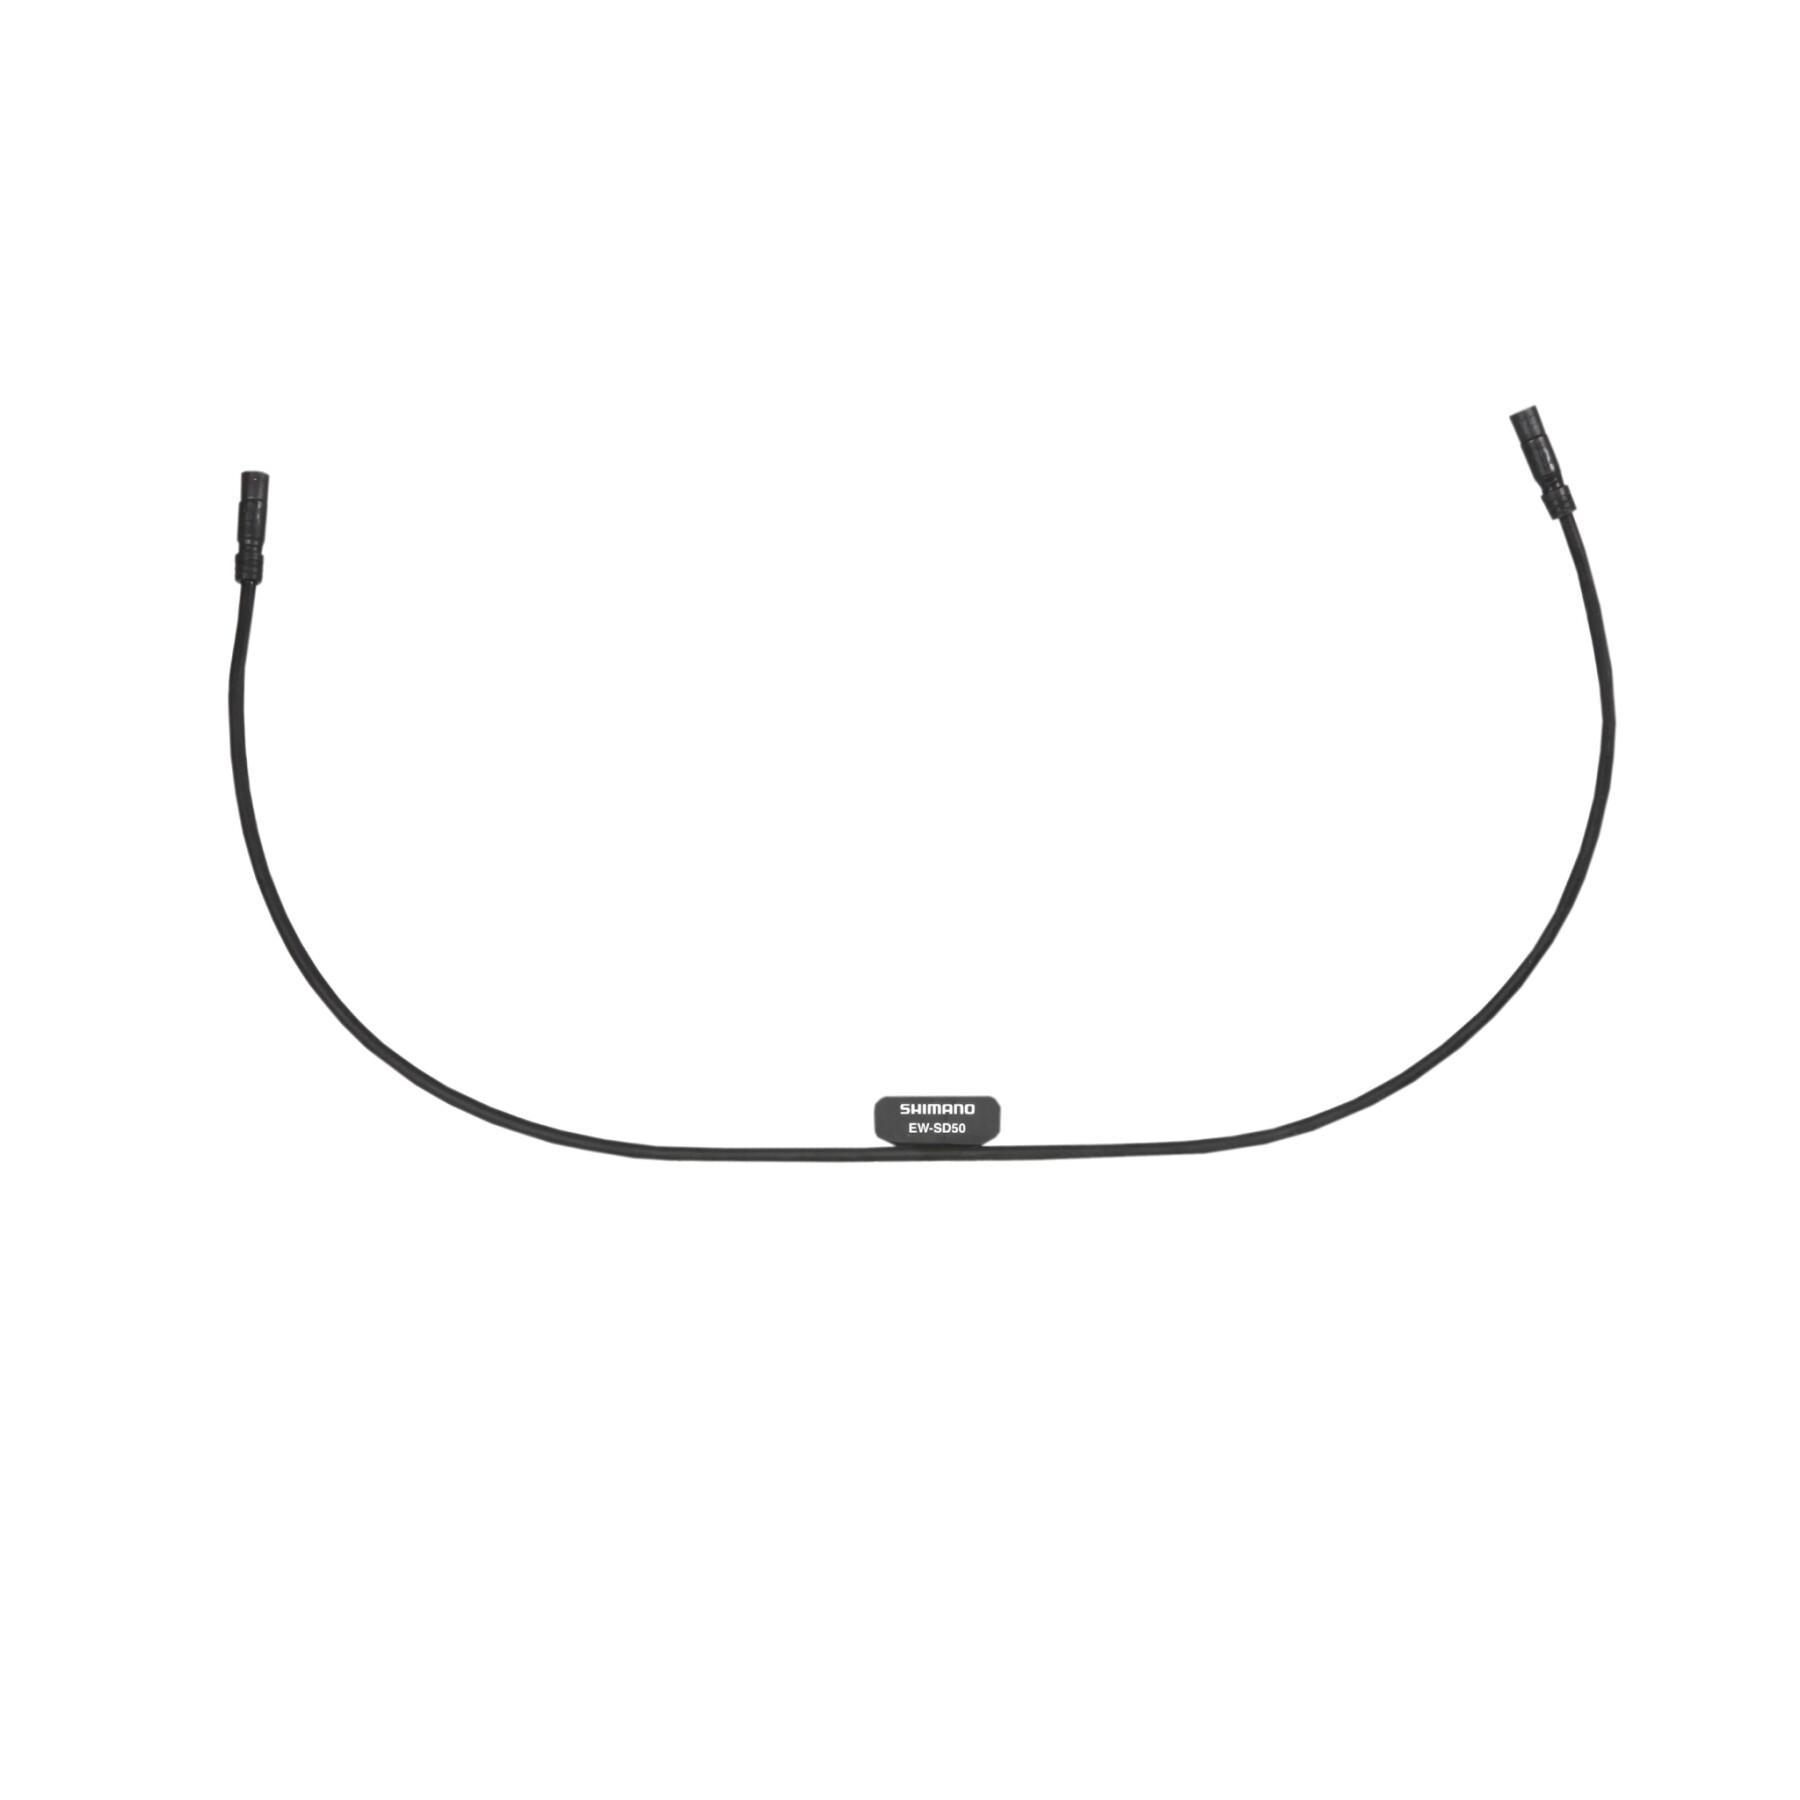 Cable eléctrico Shimano ew-sd50 pour dura ace/ultegra Di2 150 mm